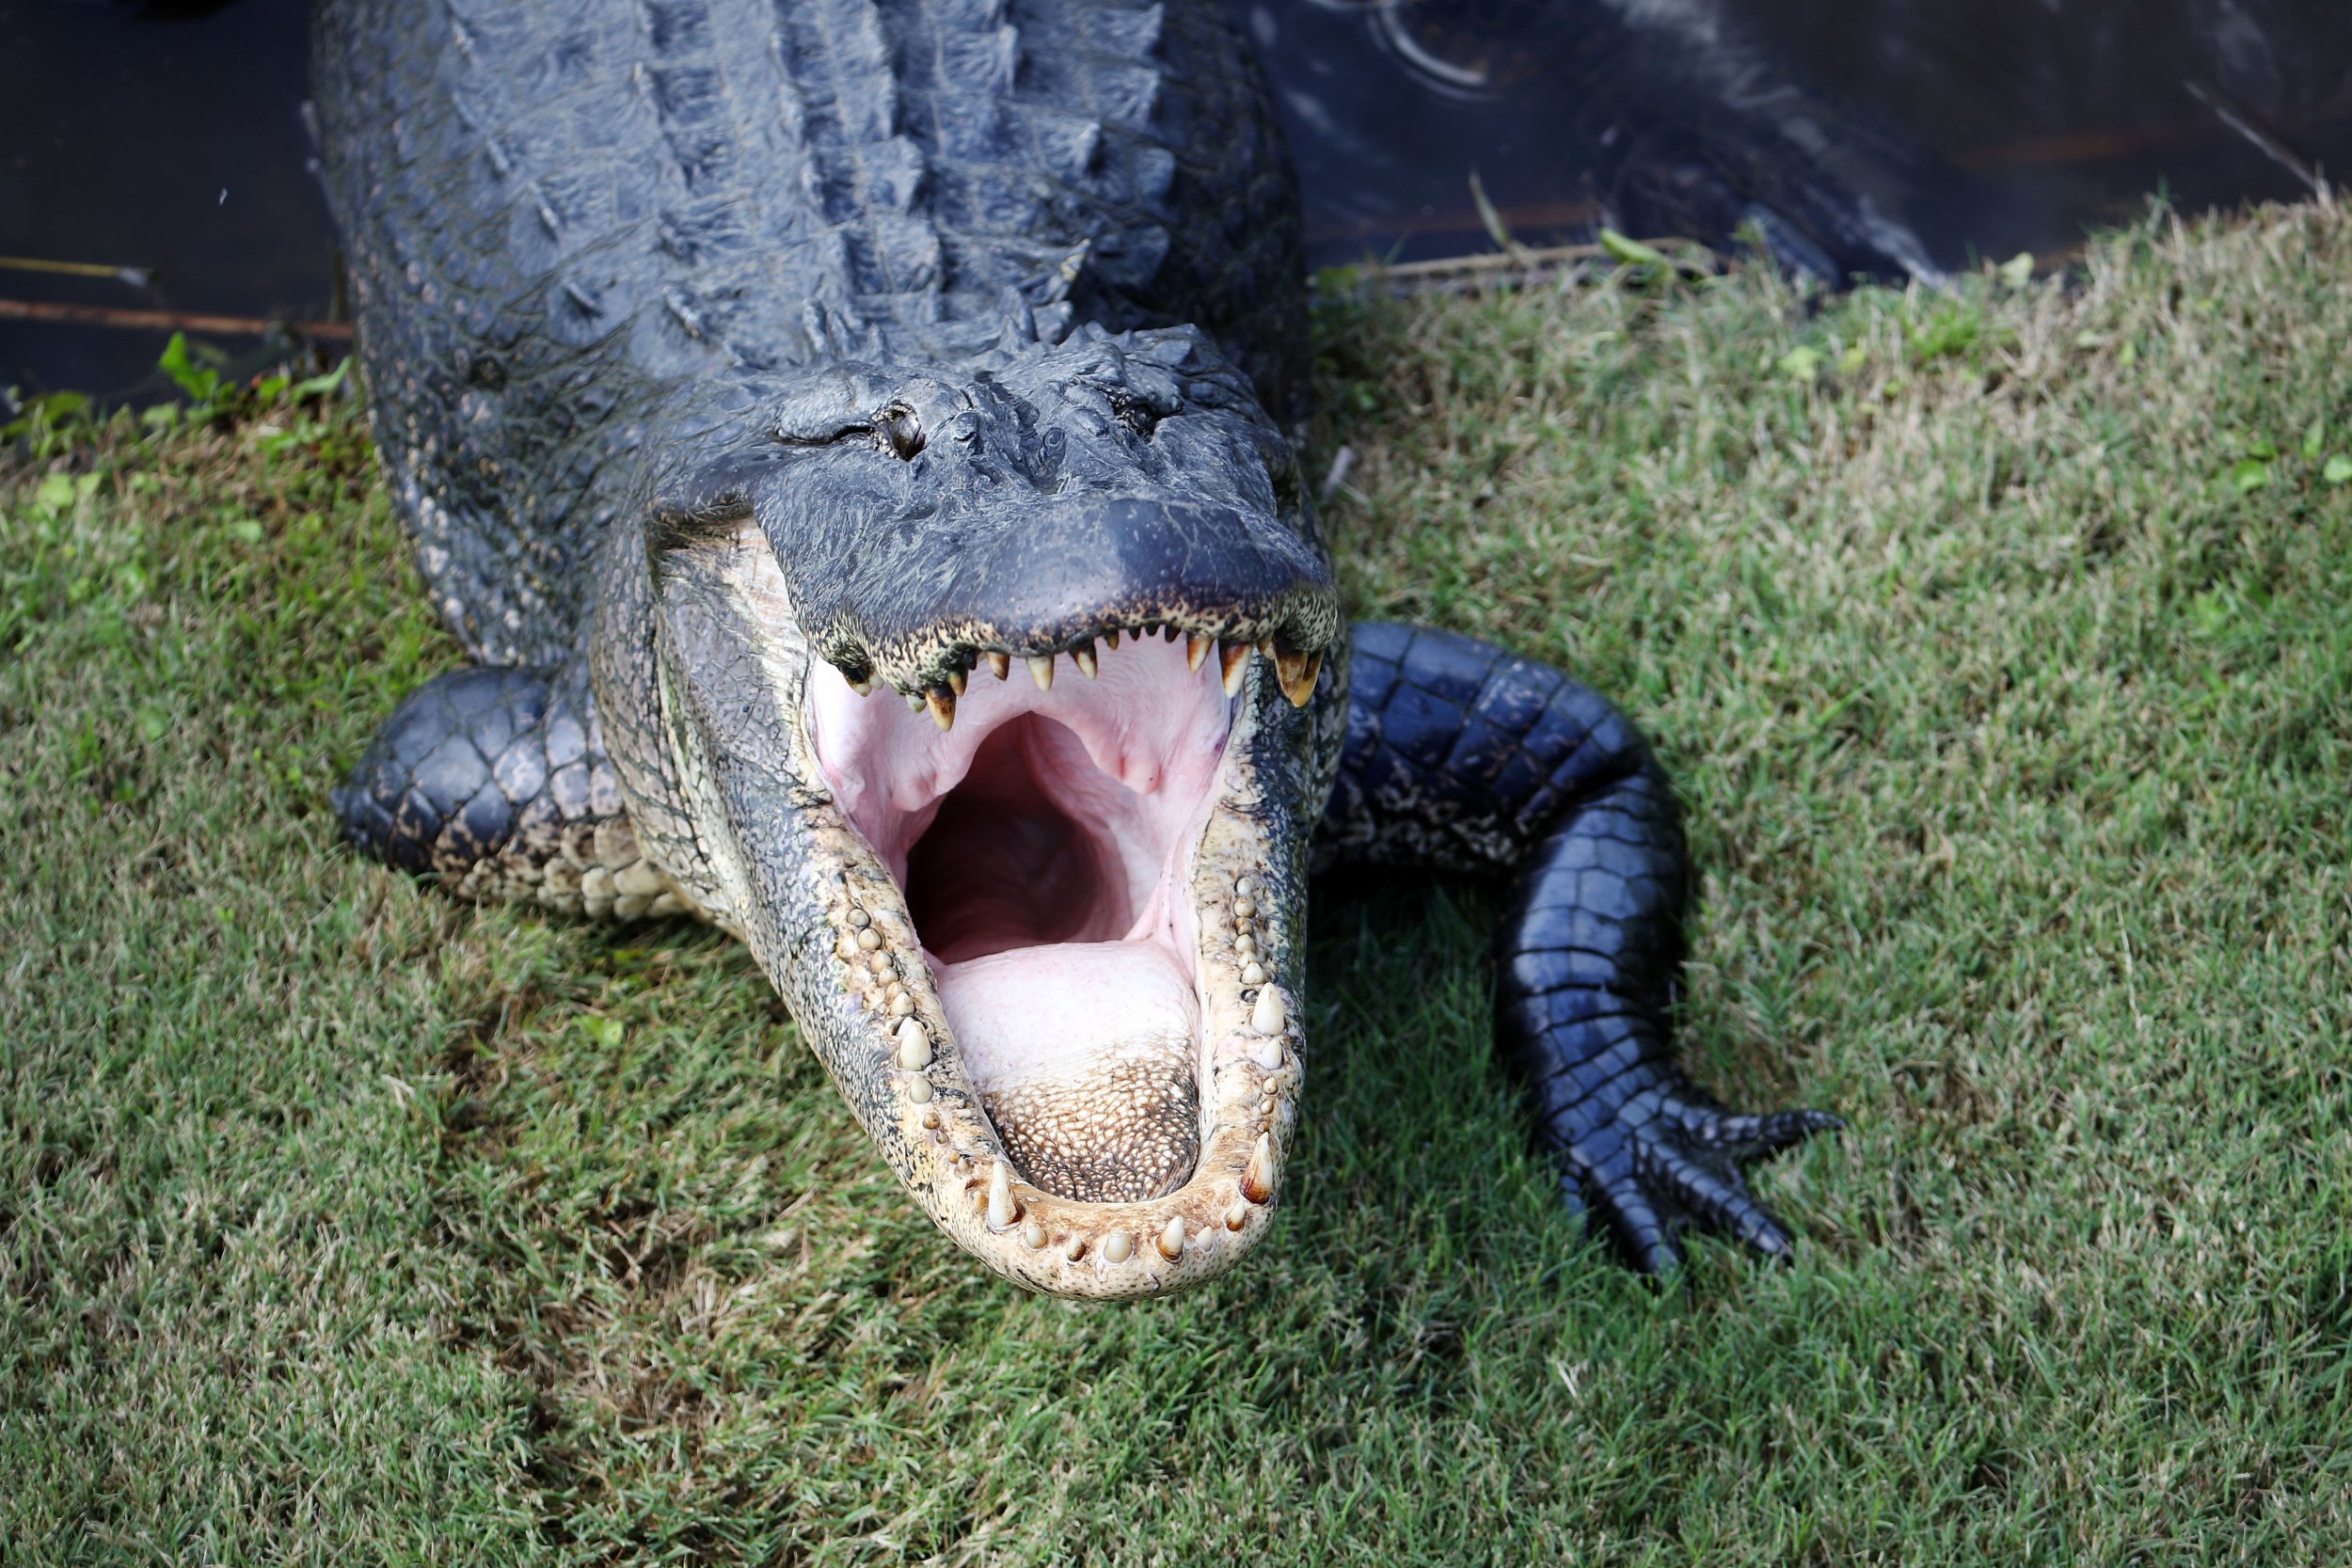 Alligator attacks, kills south carolina woman 